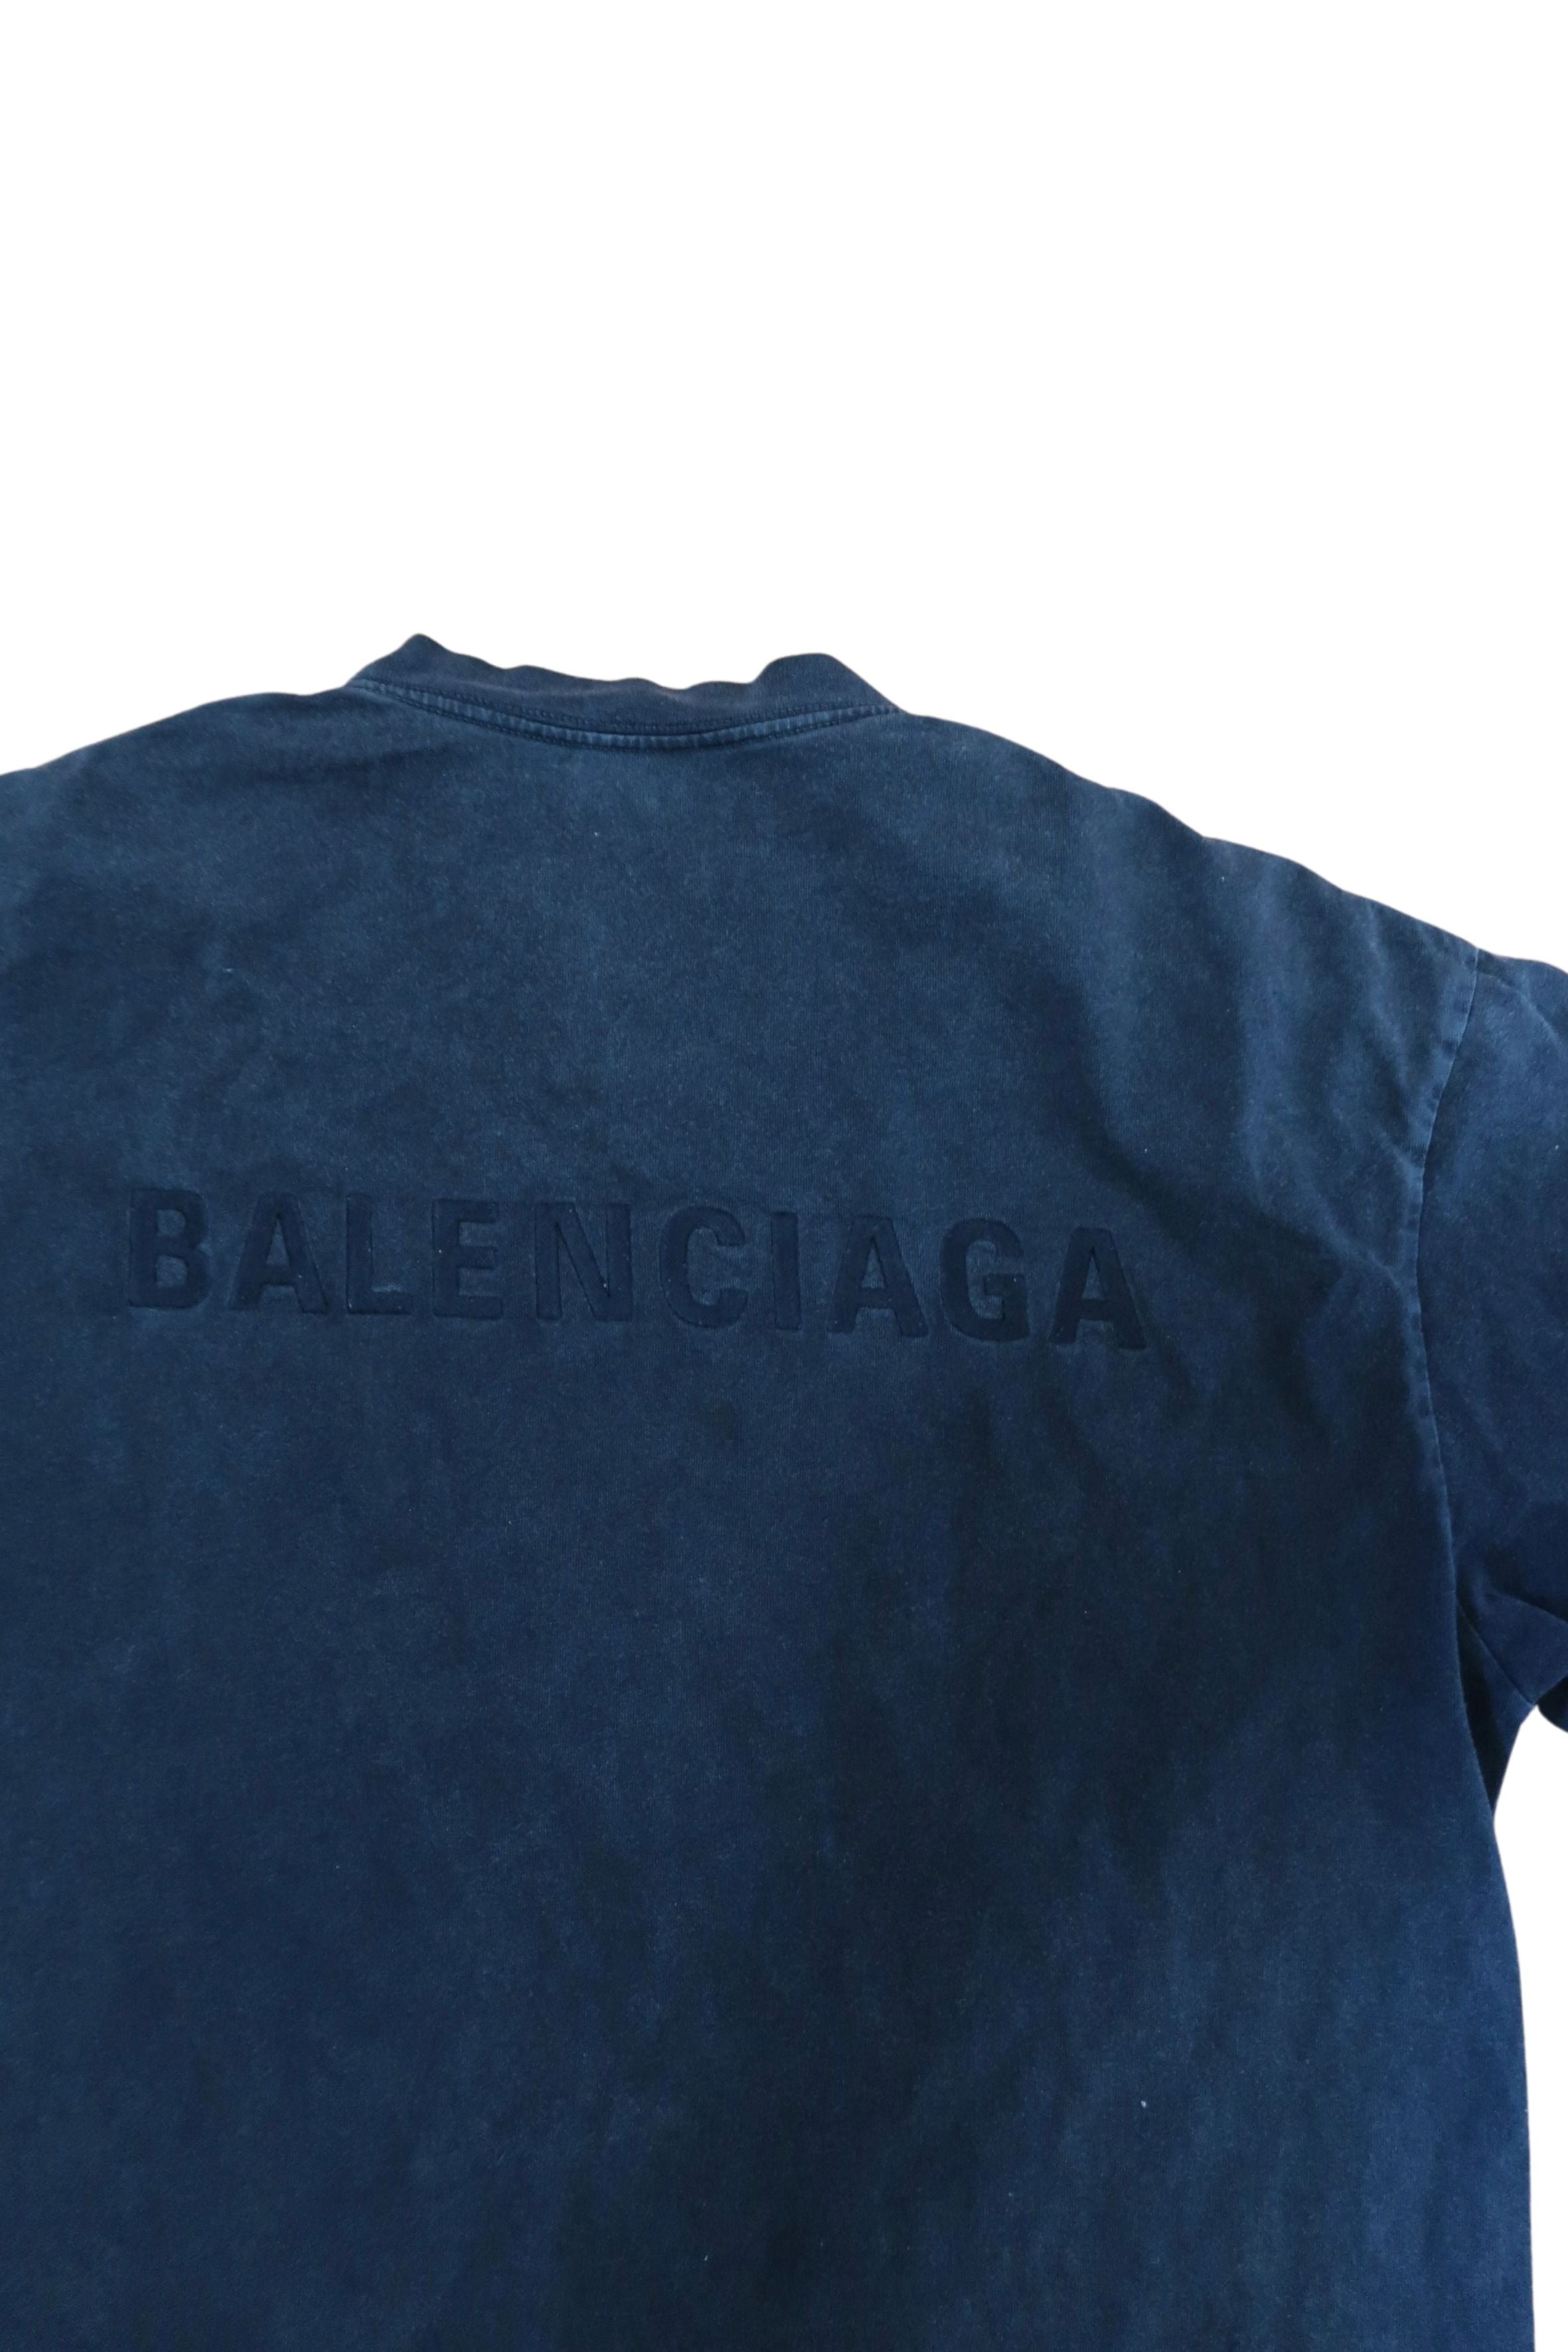 Balenciaga Black Embroidered Logo T-Shirt (Fits like M-L)